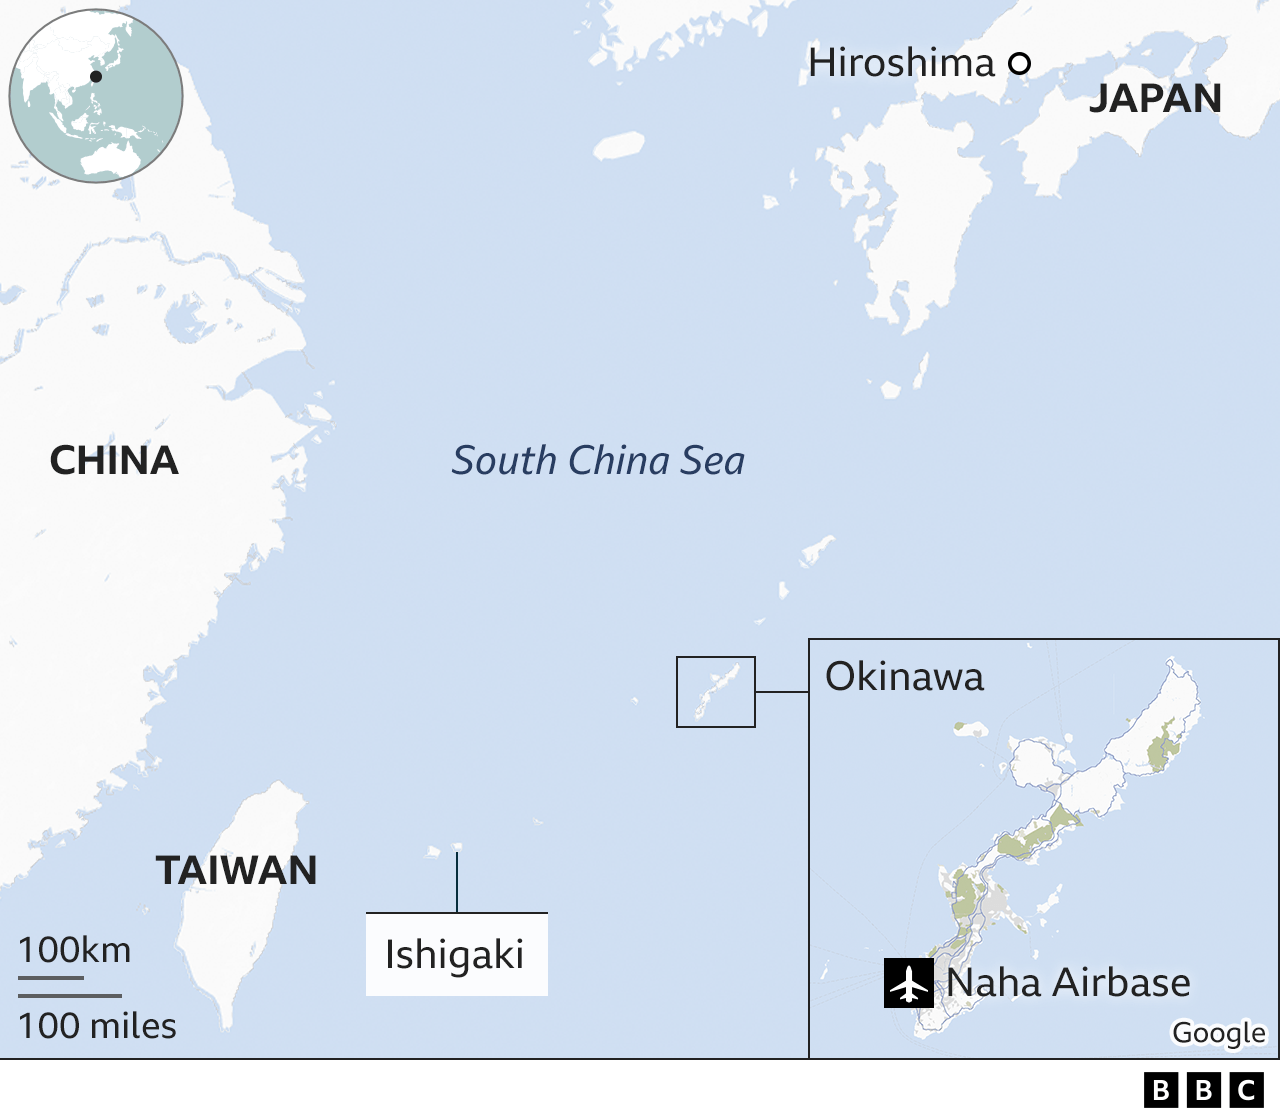 BBC map showing location of Okinawa and Ishigaki in Japan